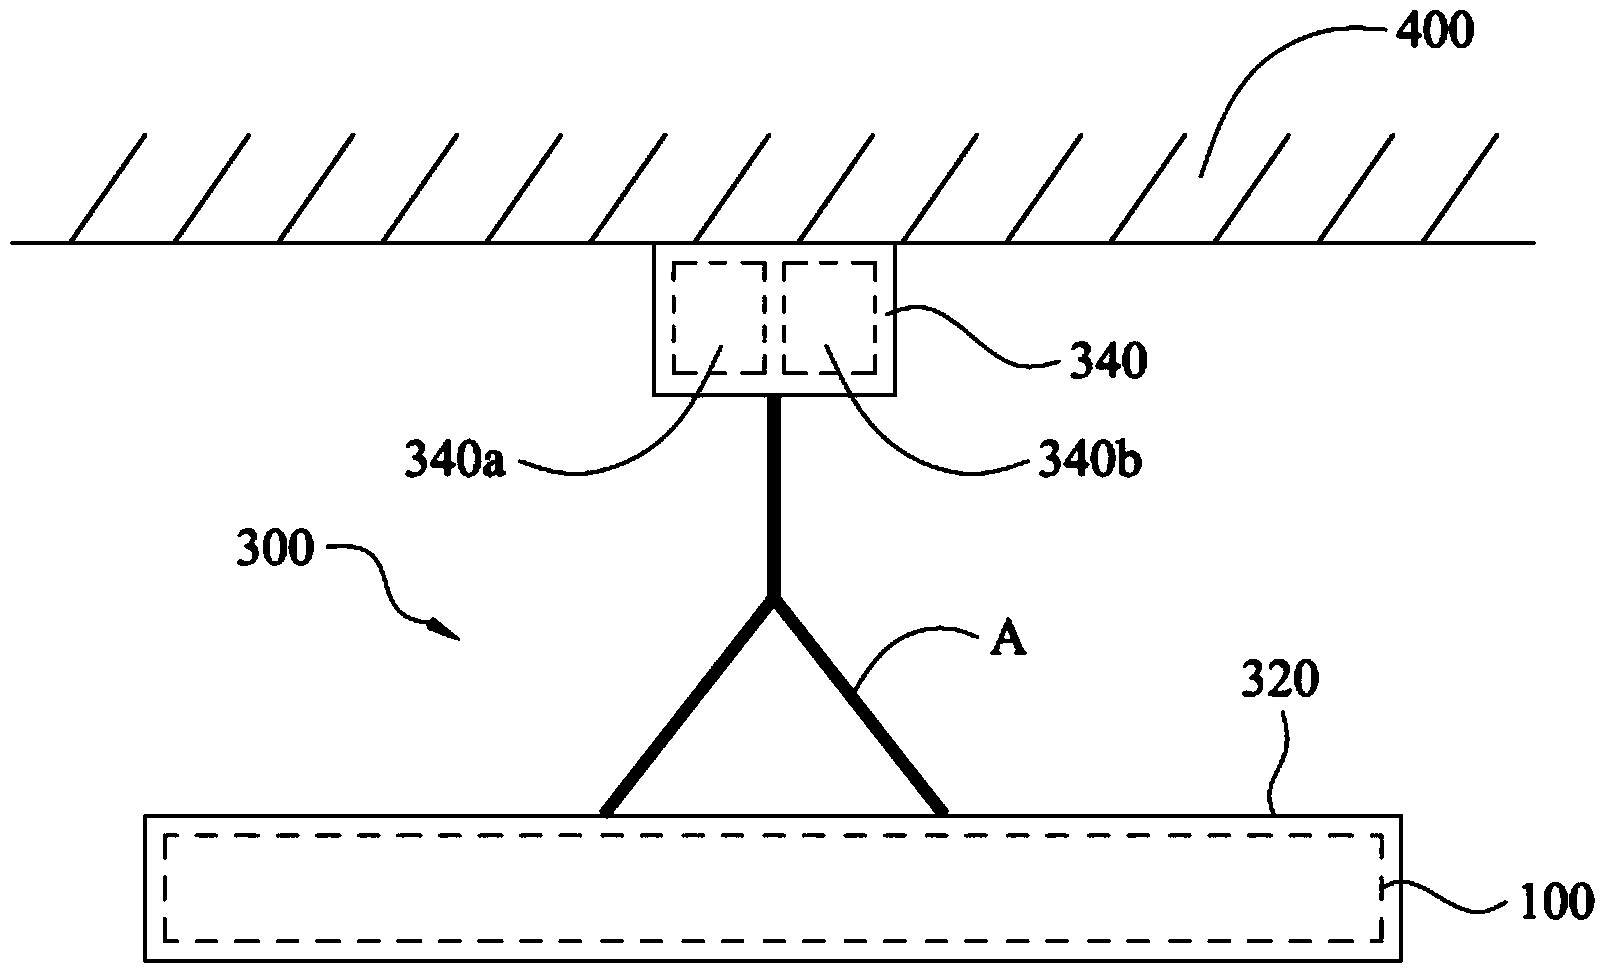 Light bar structure, light source module and lamp